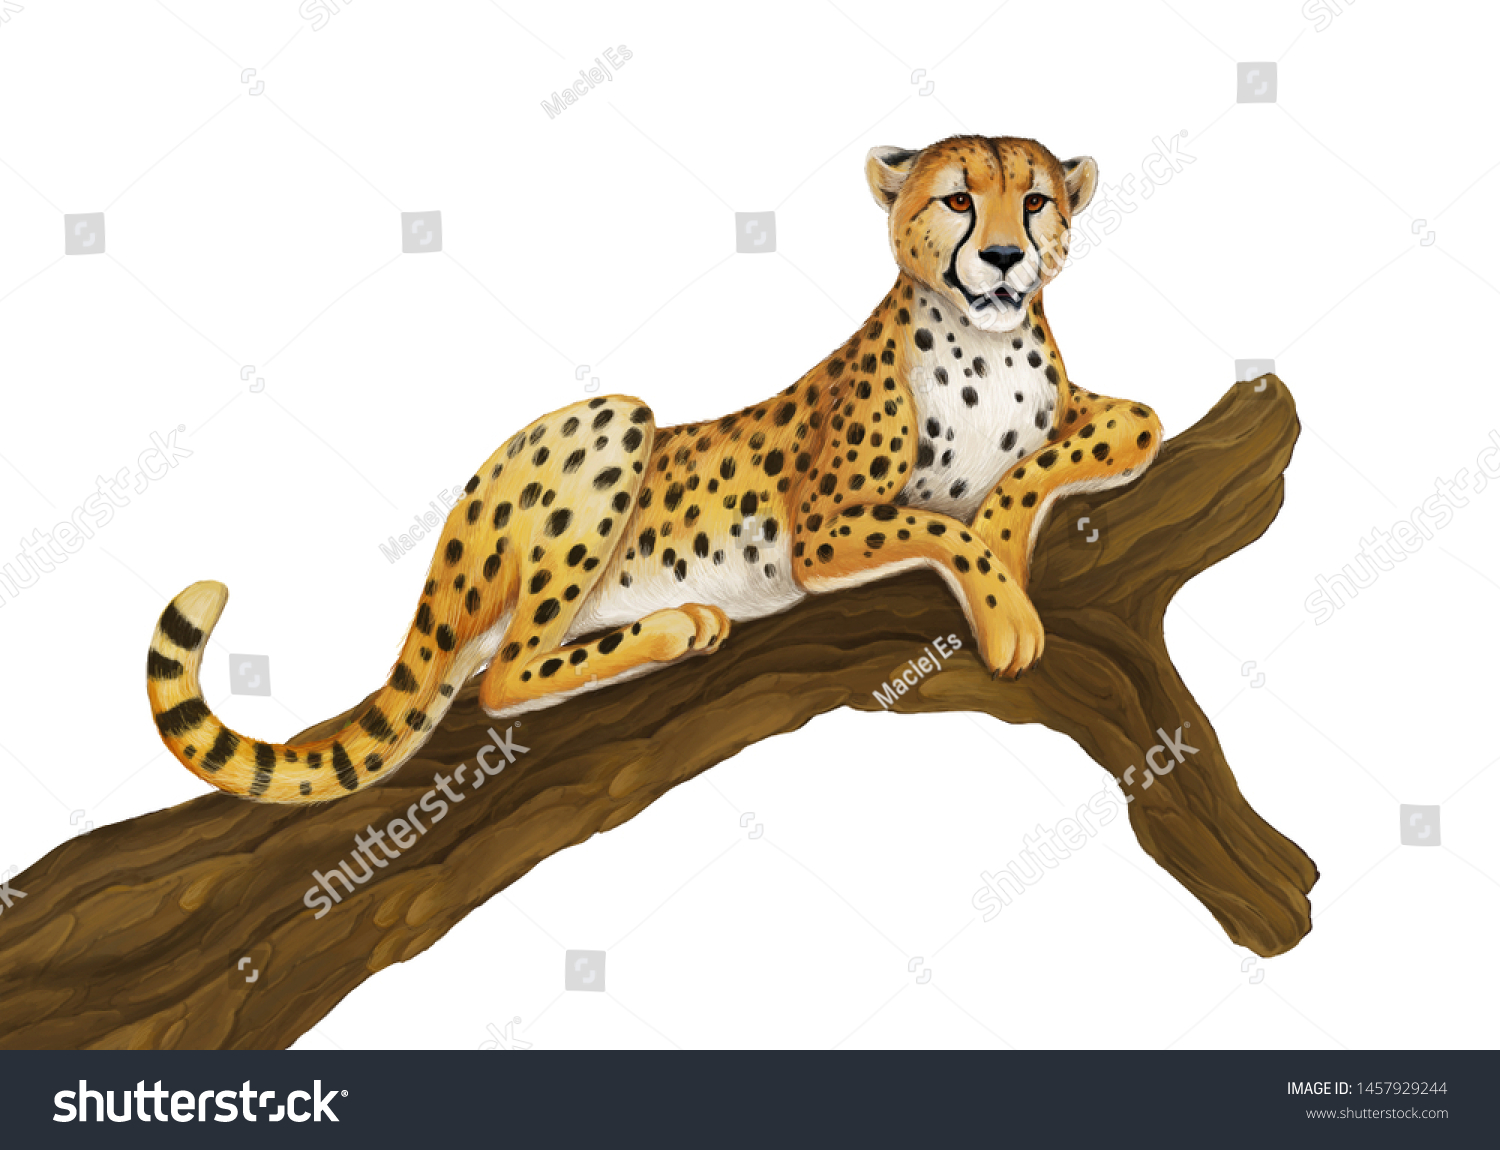 Гепард на дереве рисунок